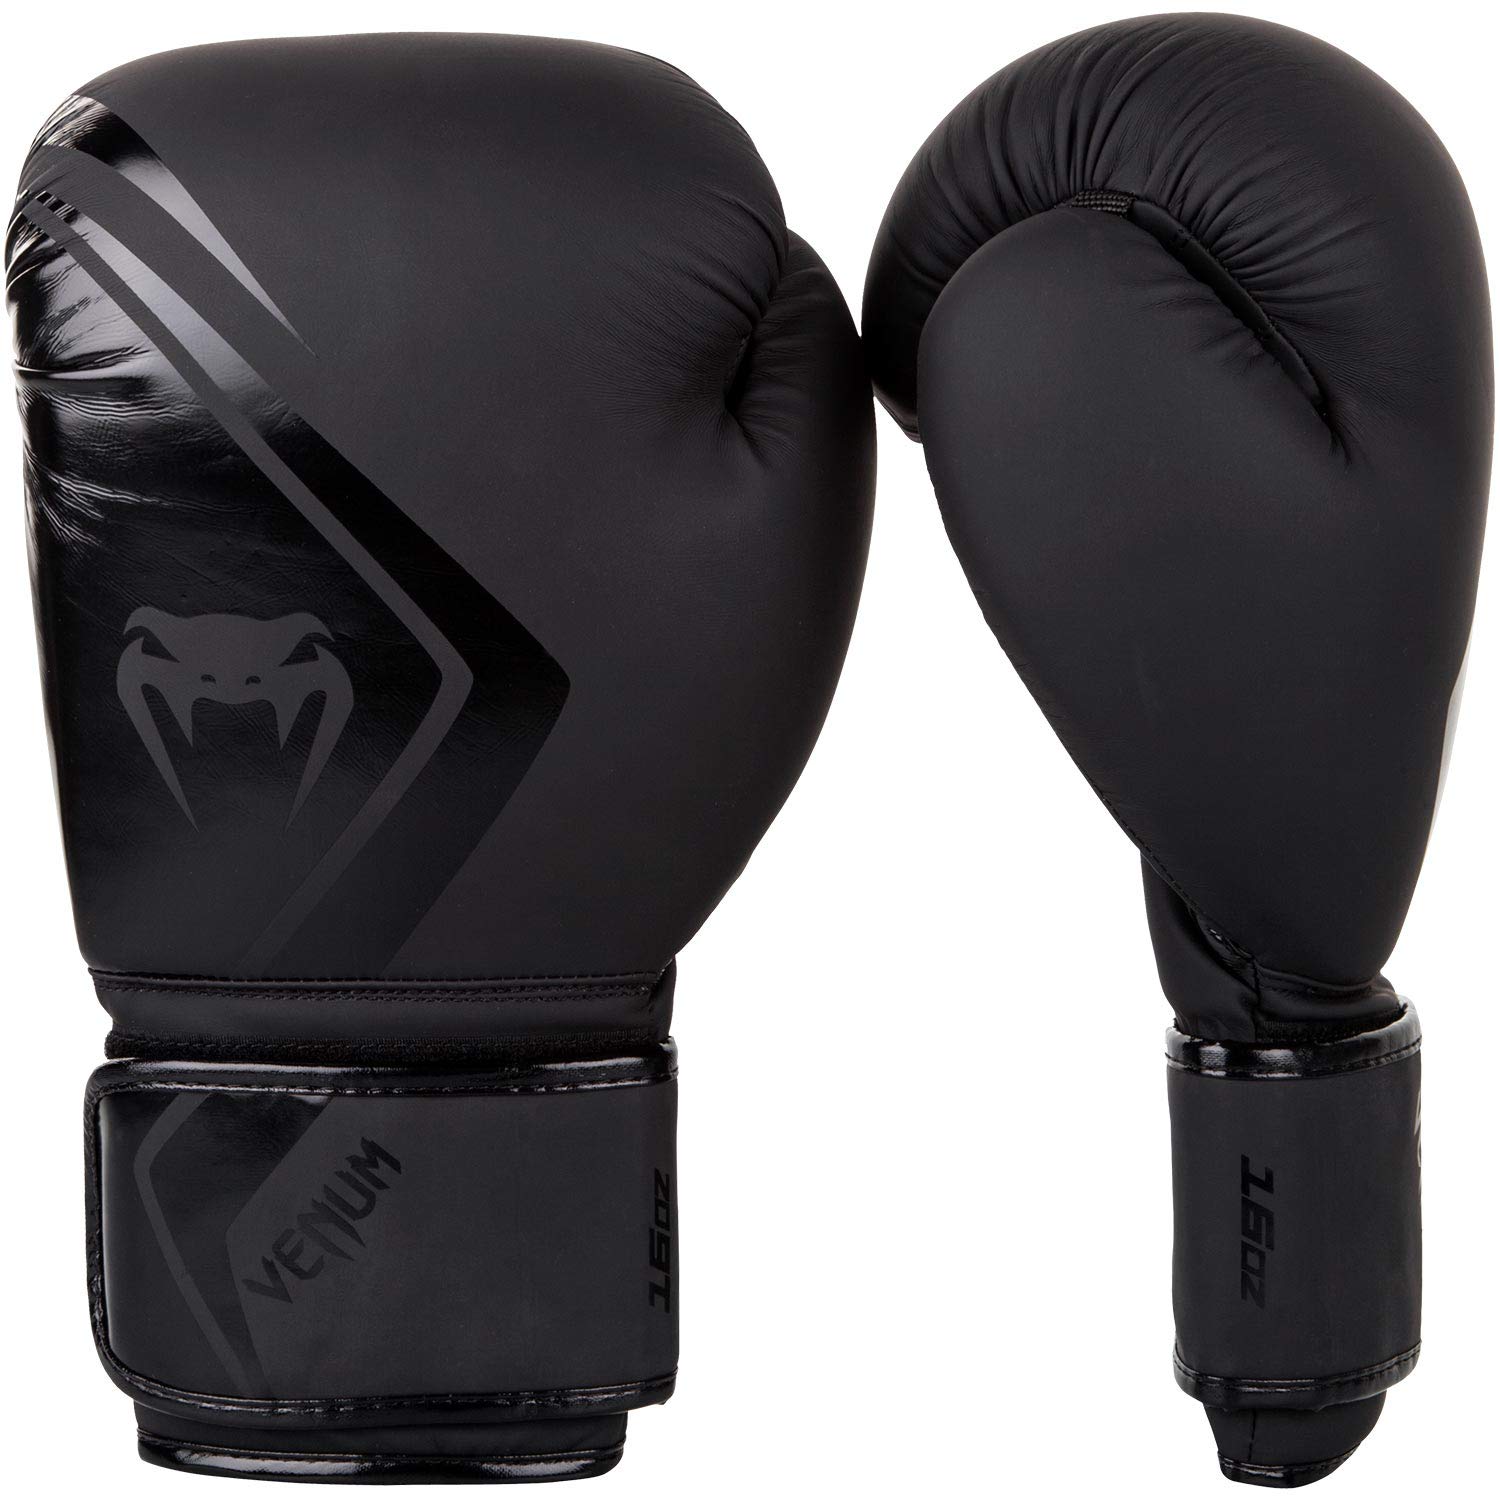 Venum Contender 2.0 Boxing Gloves - Best Price online Prokicksports.com